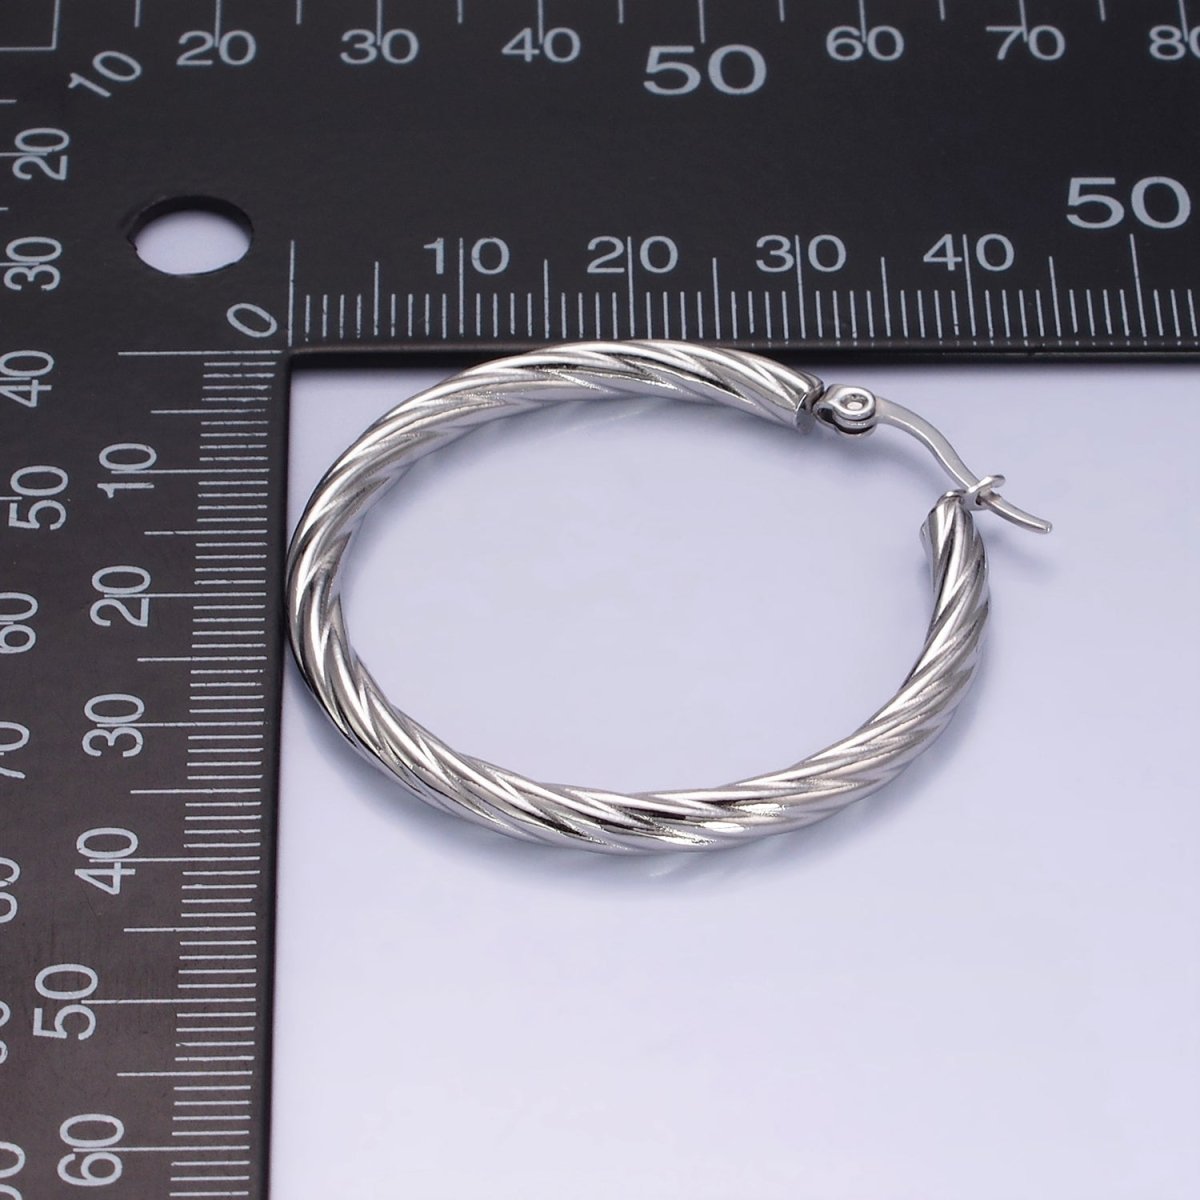 Stainless Steel 40mm Twisted Line-Textured Latch Hoop Earrings | AE247 - DLUXCA